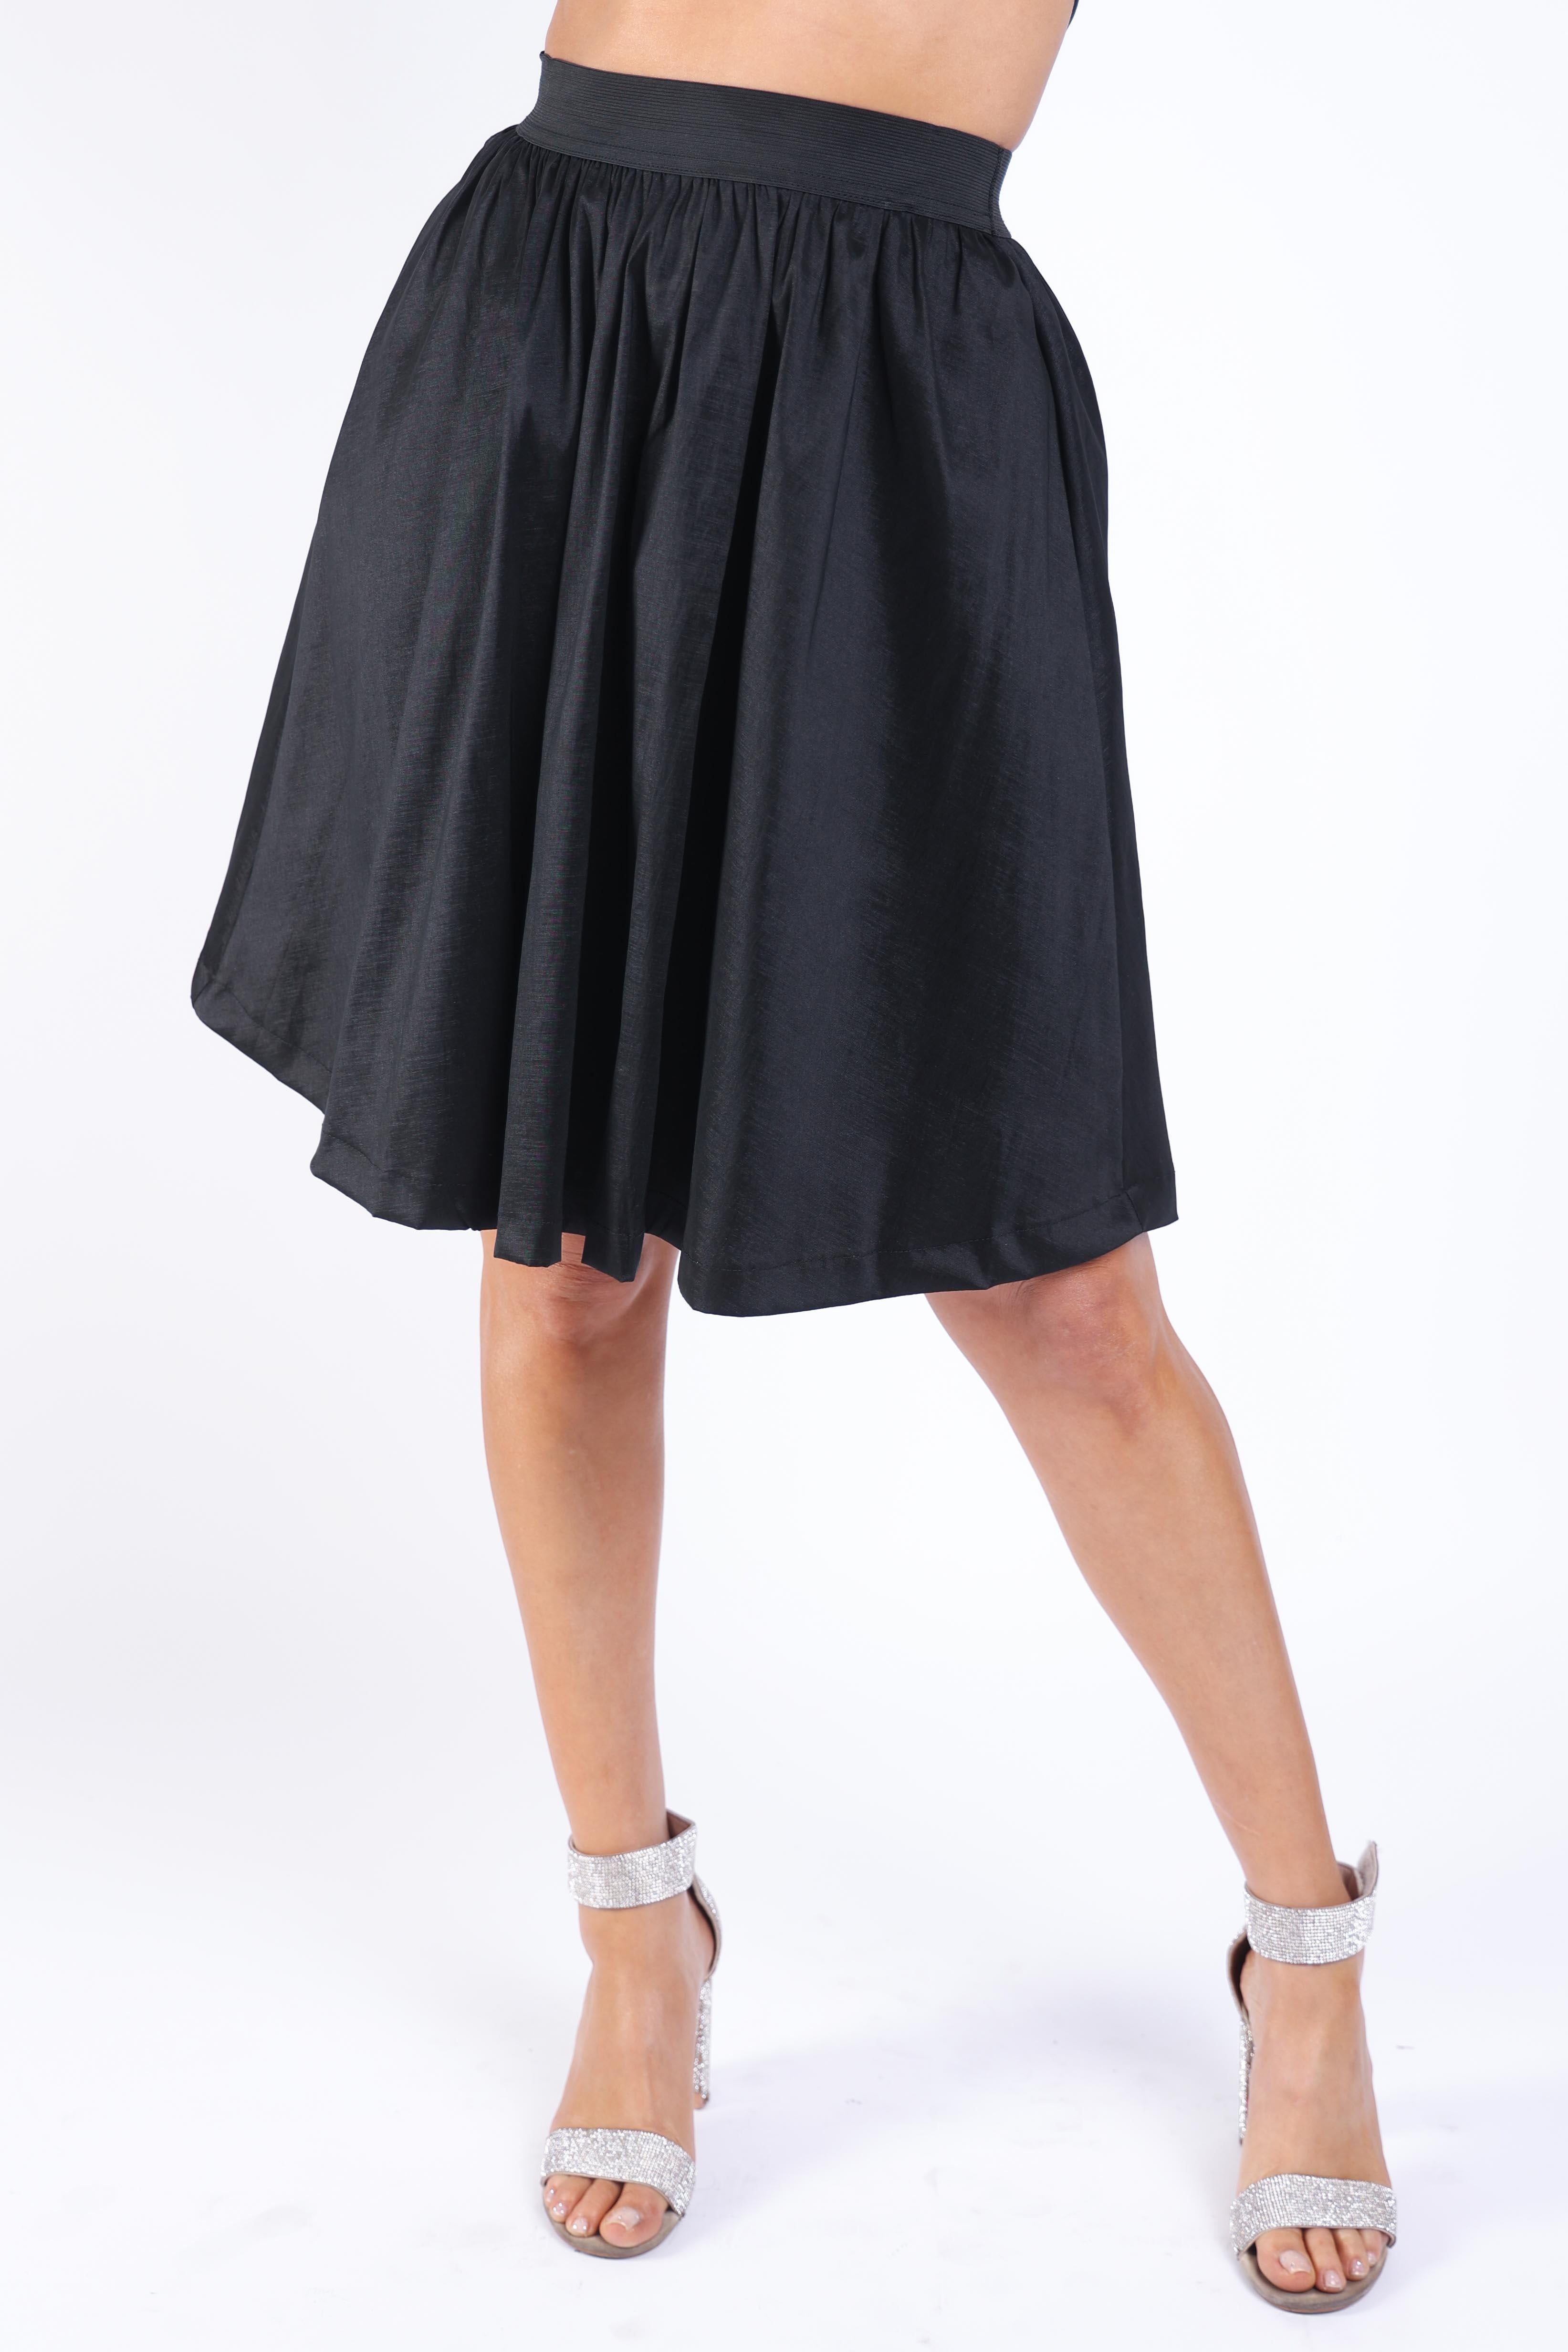 High Waist A-Line Flare Midi Skirt in Black